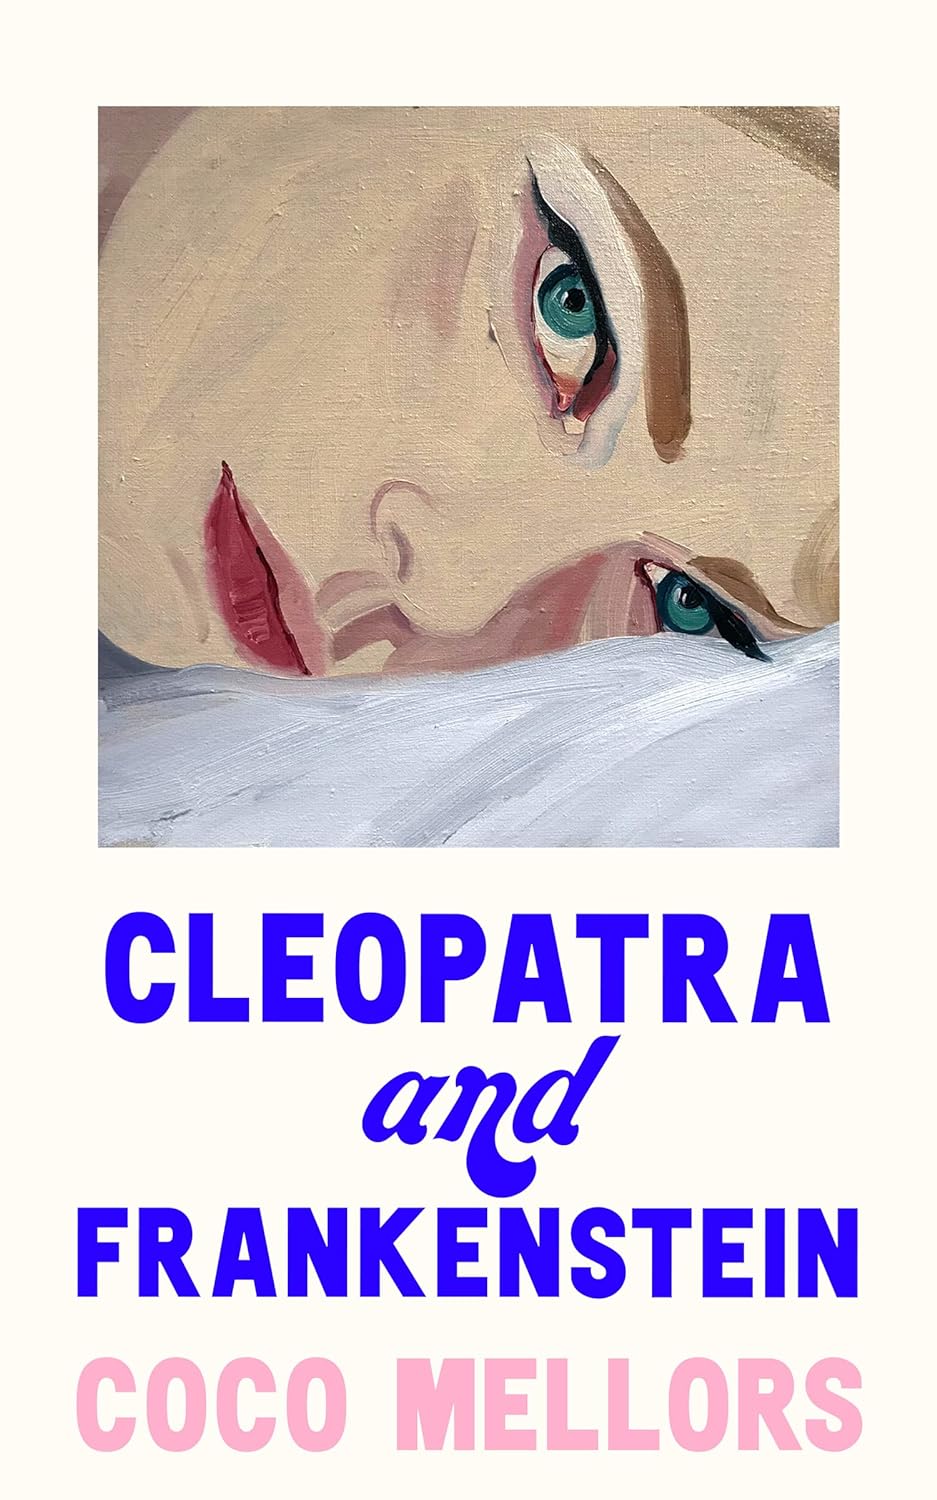 CLEOPATRA AND FRANKENSTEIN-Coco Mellors-Stumbit Women and Girls